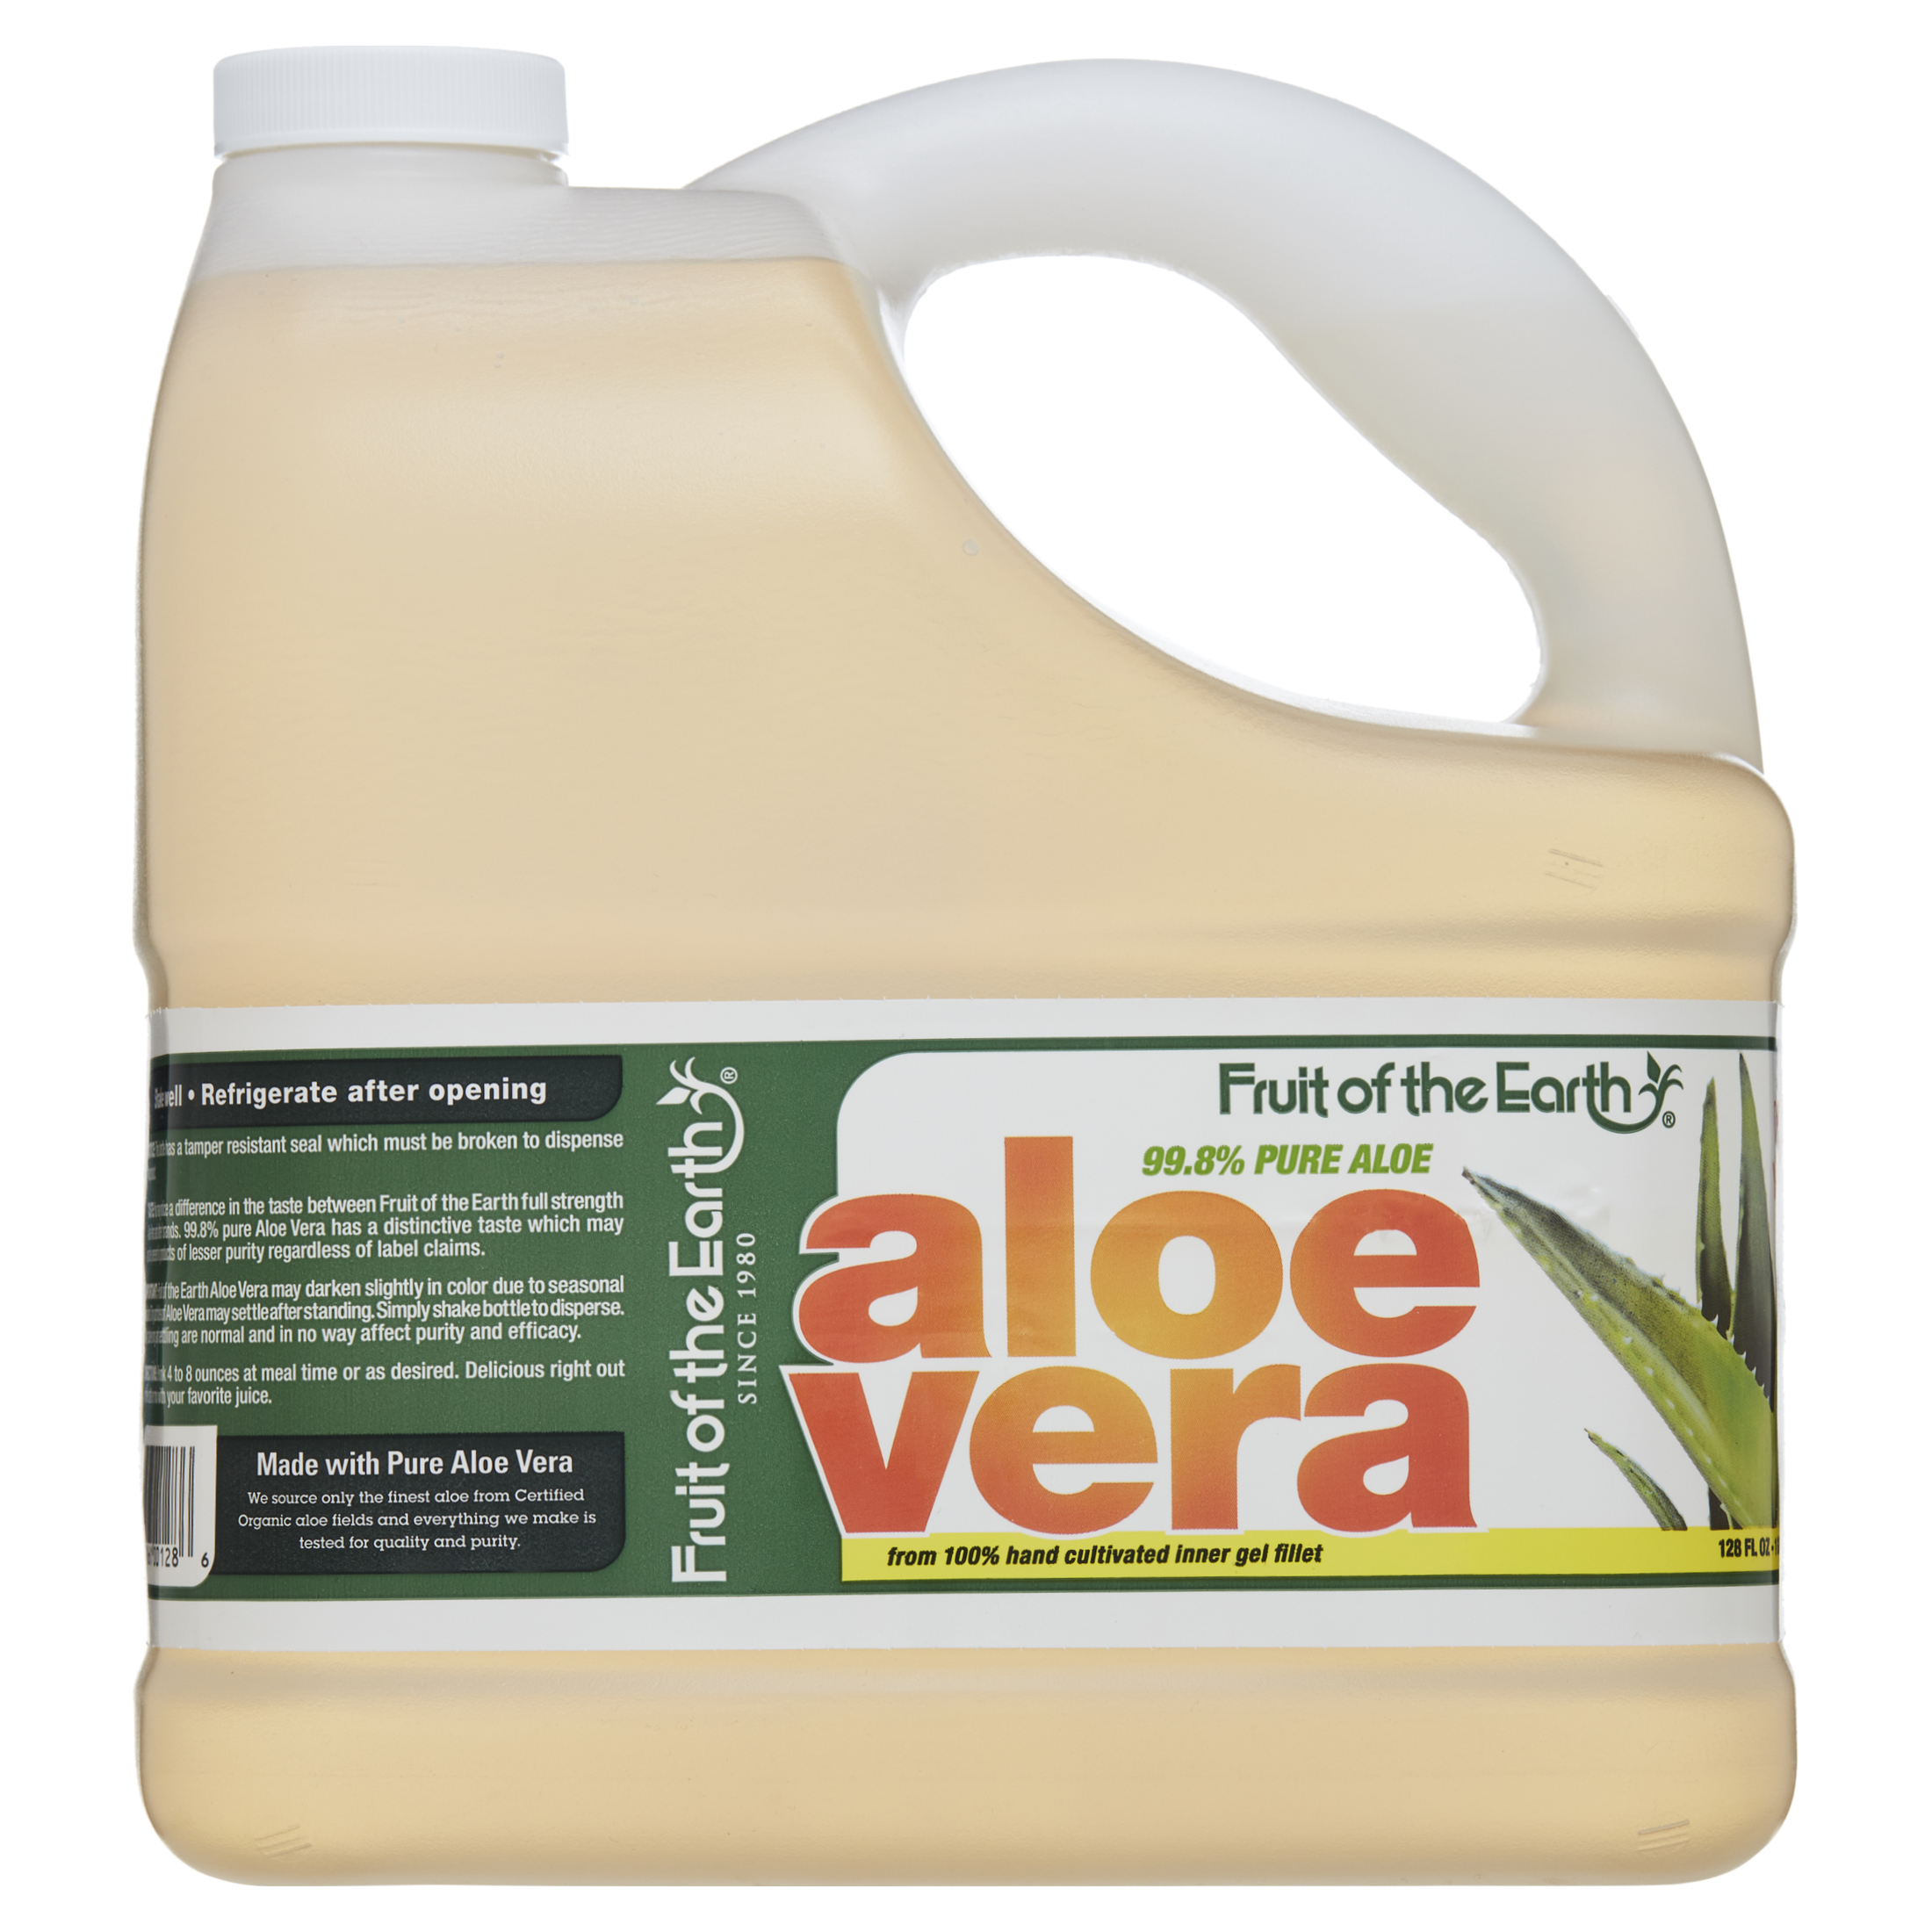 Fruit of the Earth Health & Wellness Aloe Vera Drink, 128 fluid ounces - image 1 of 5